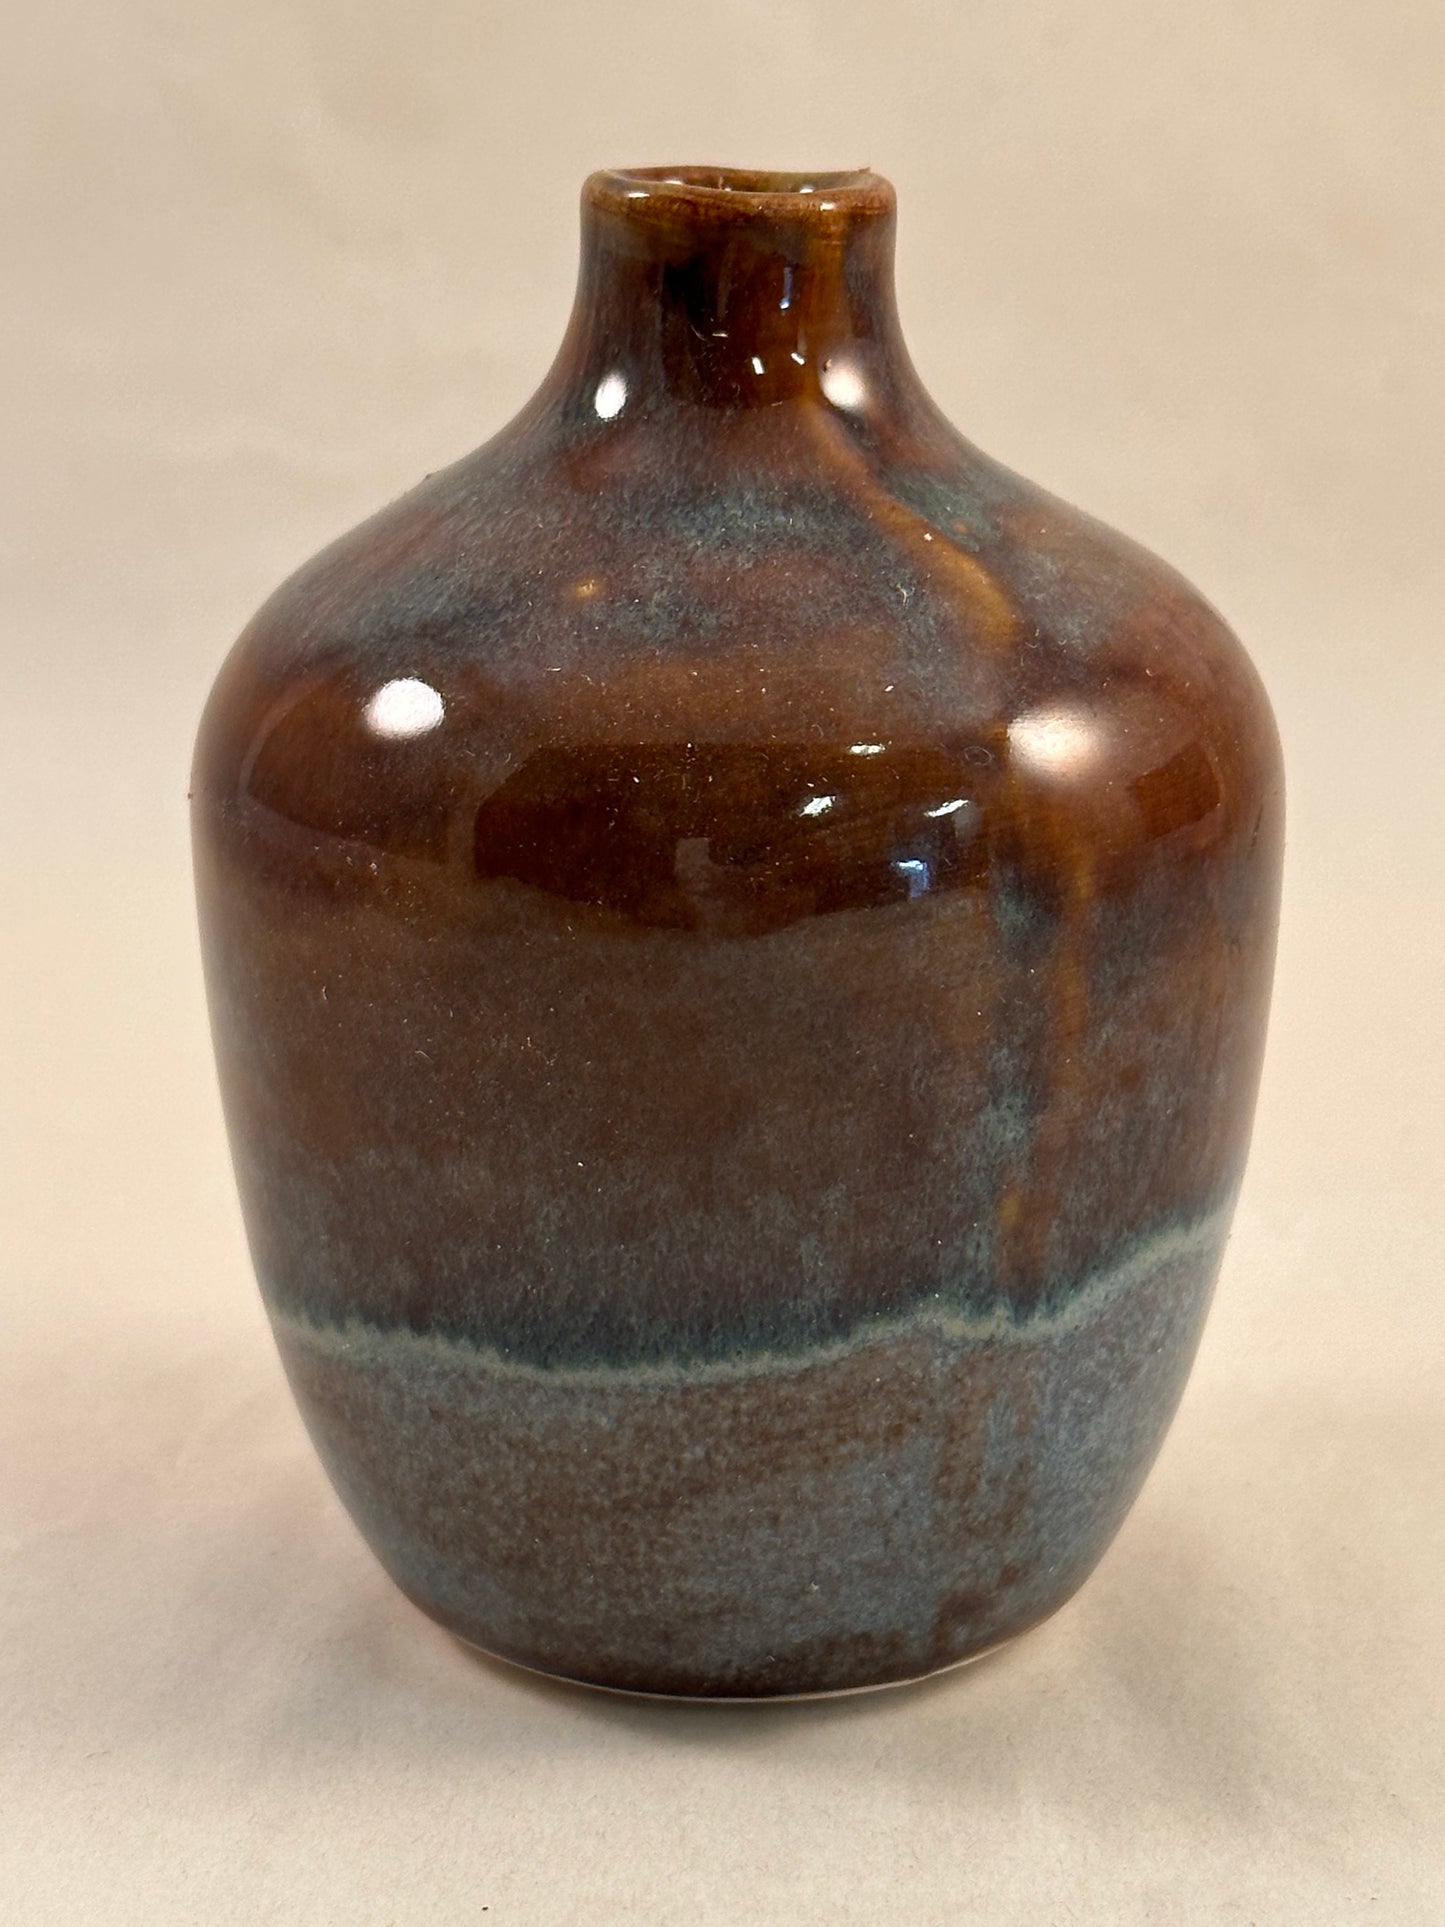 Small porcelain bud vase